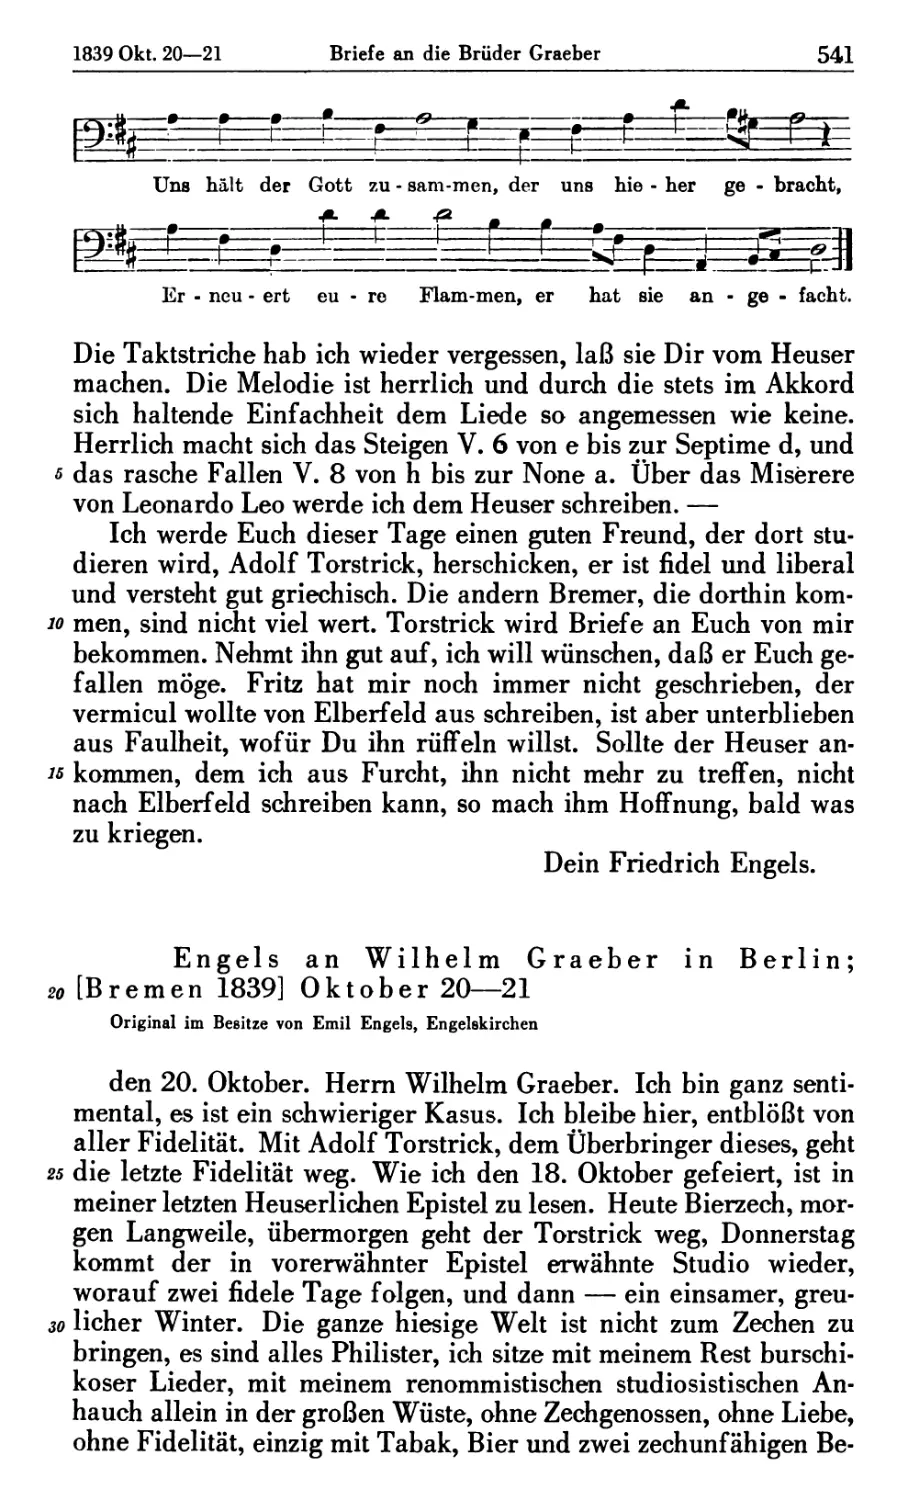 Engels an Wilhelm Graeber in Berlin; [Bremen 1839] Oktober 20-21